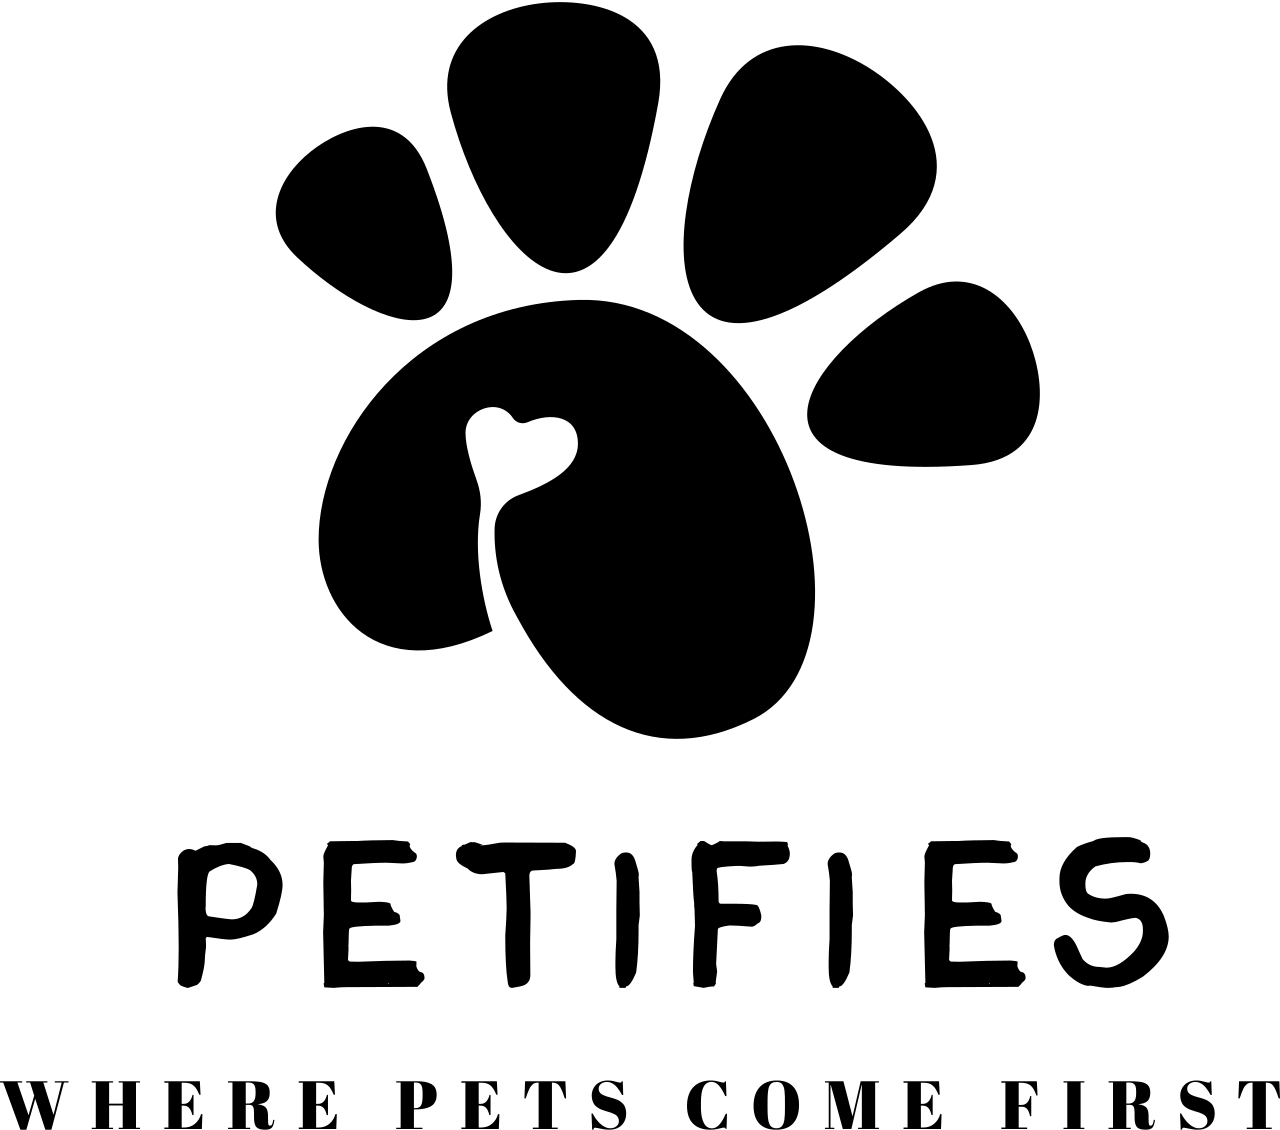 Petifies's logo